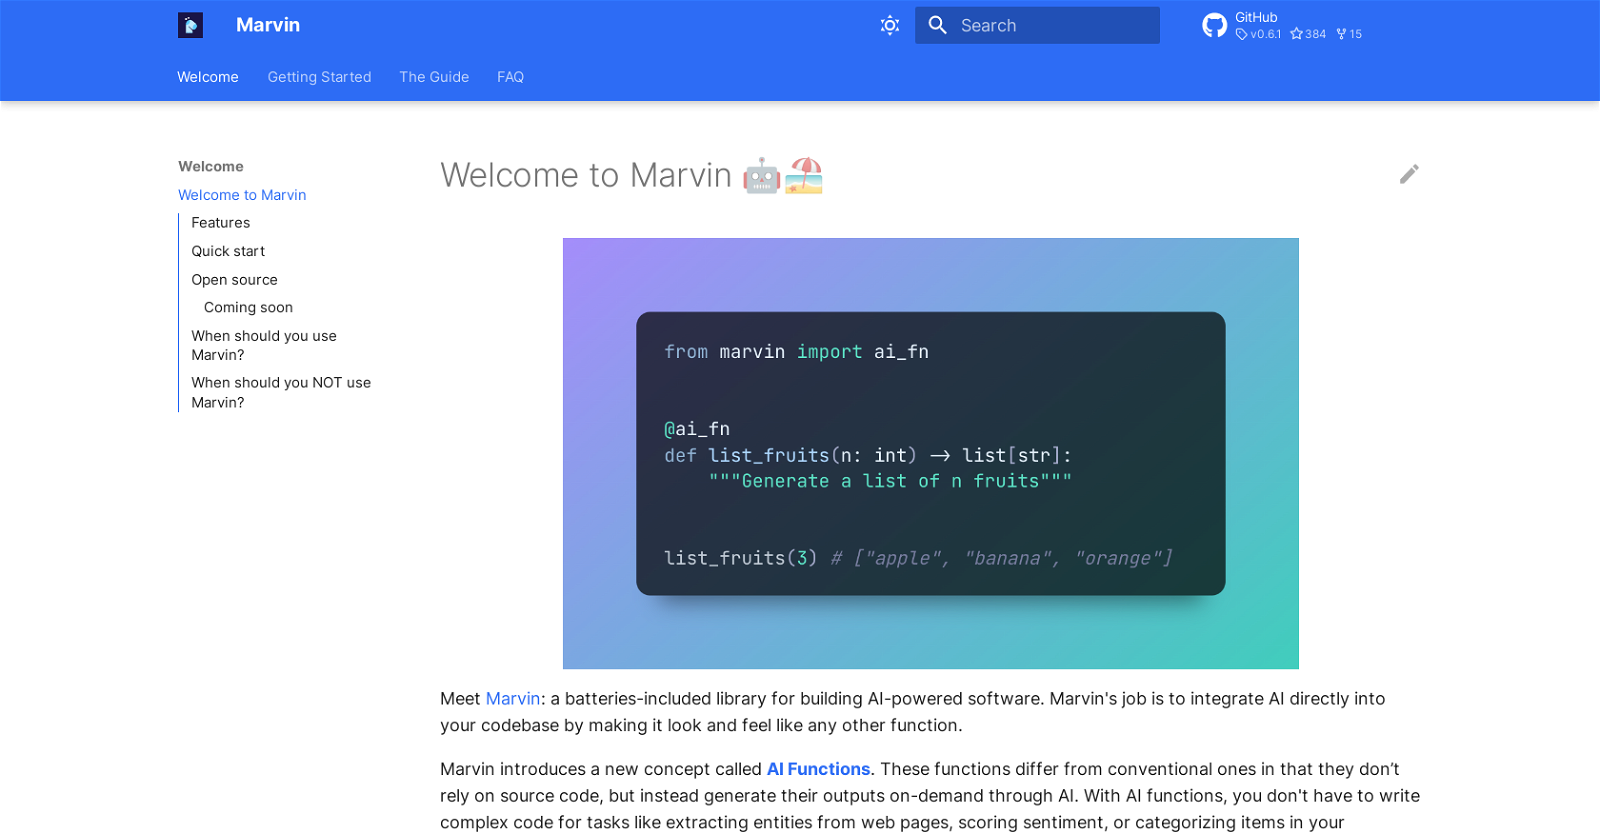 Marvin website